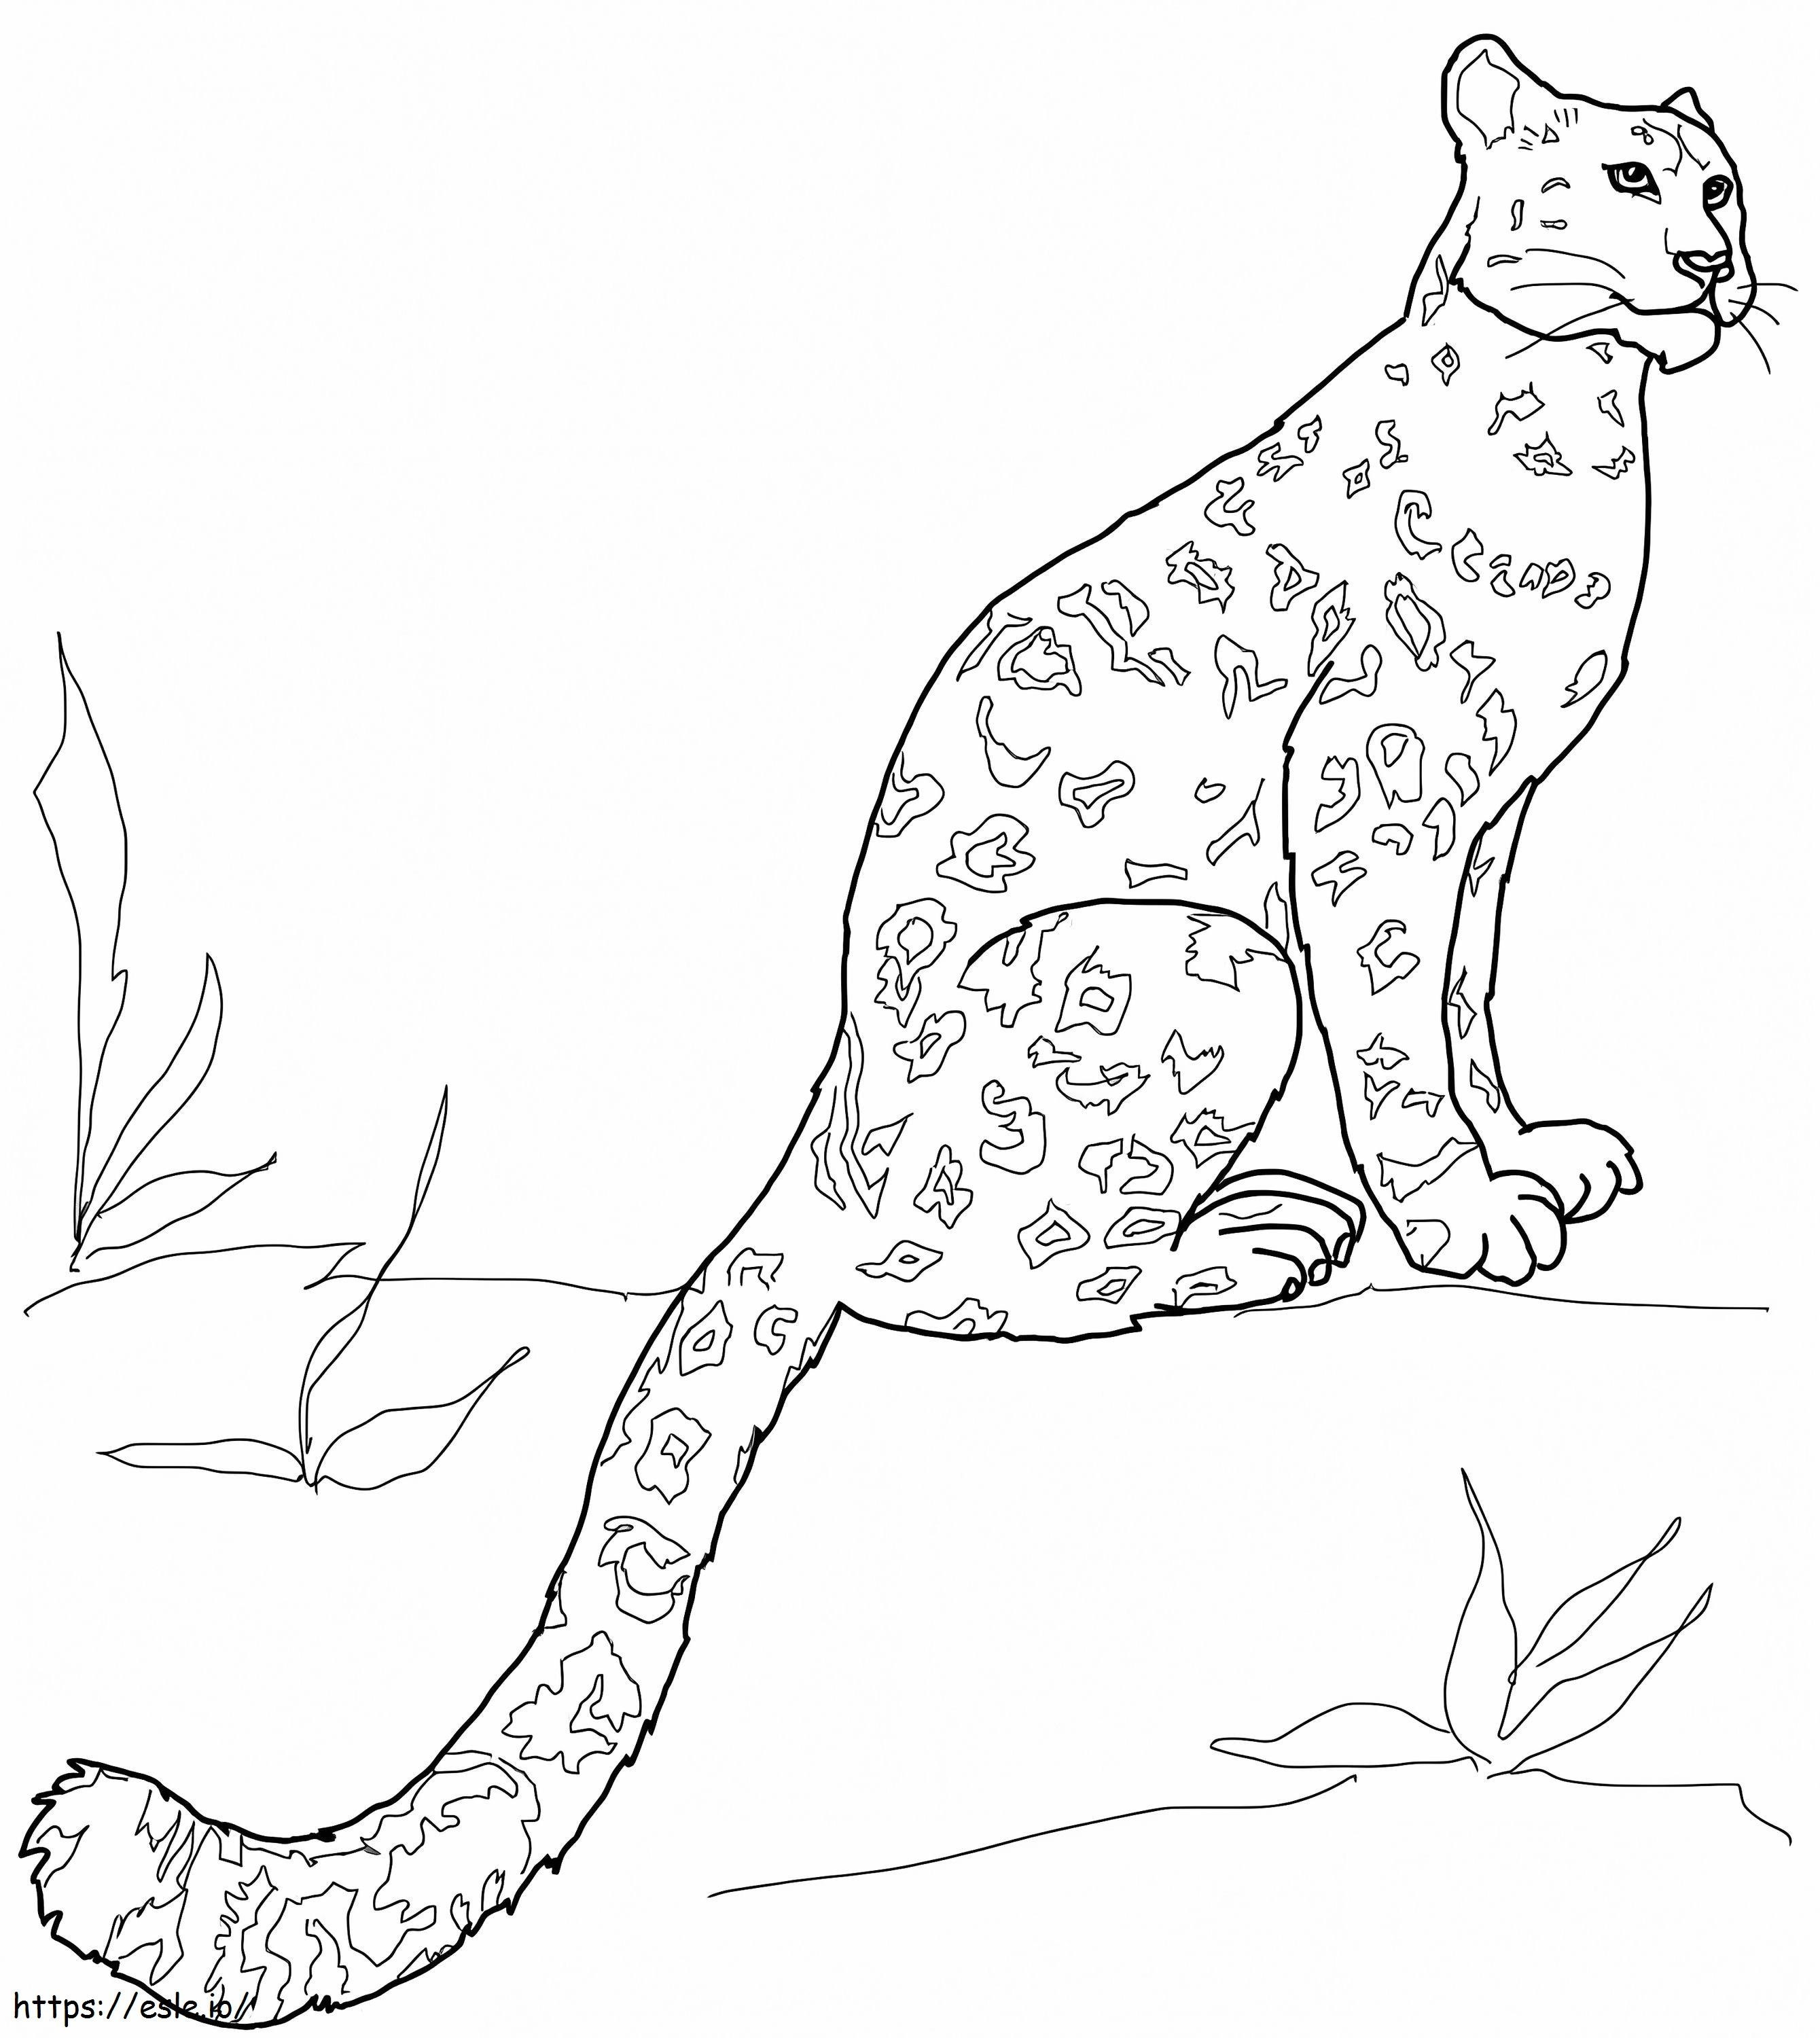 Leopardo da neve para colorir